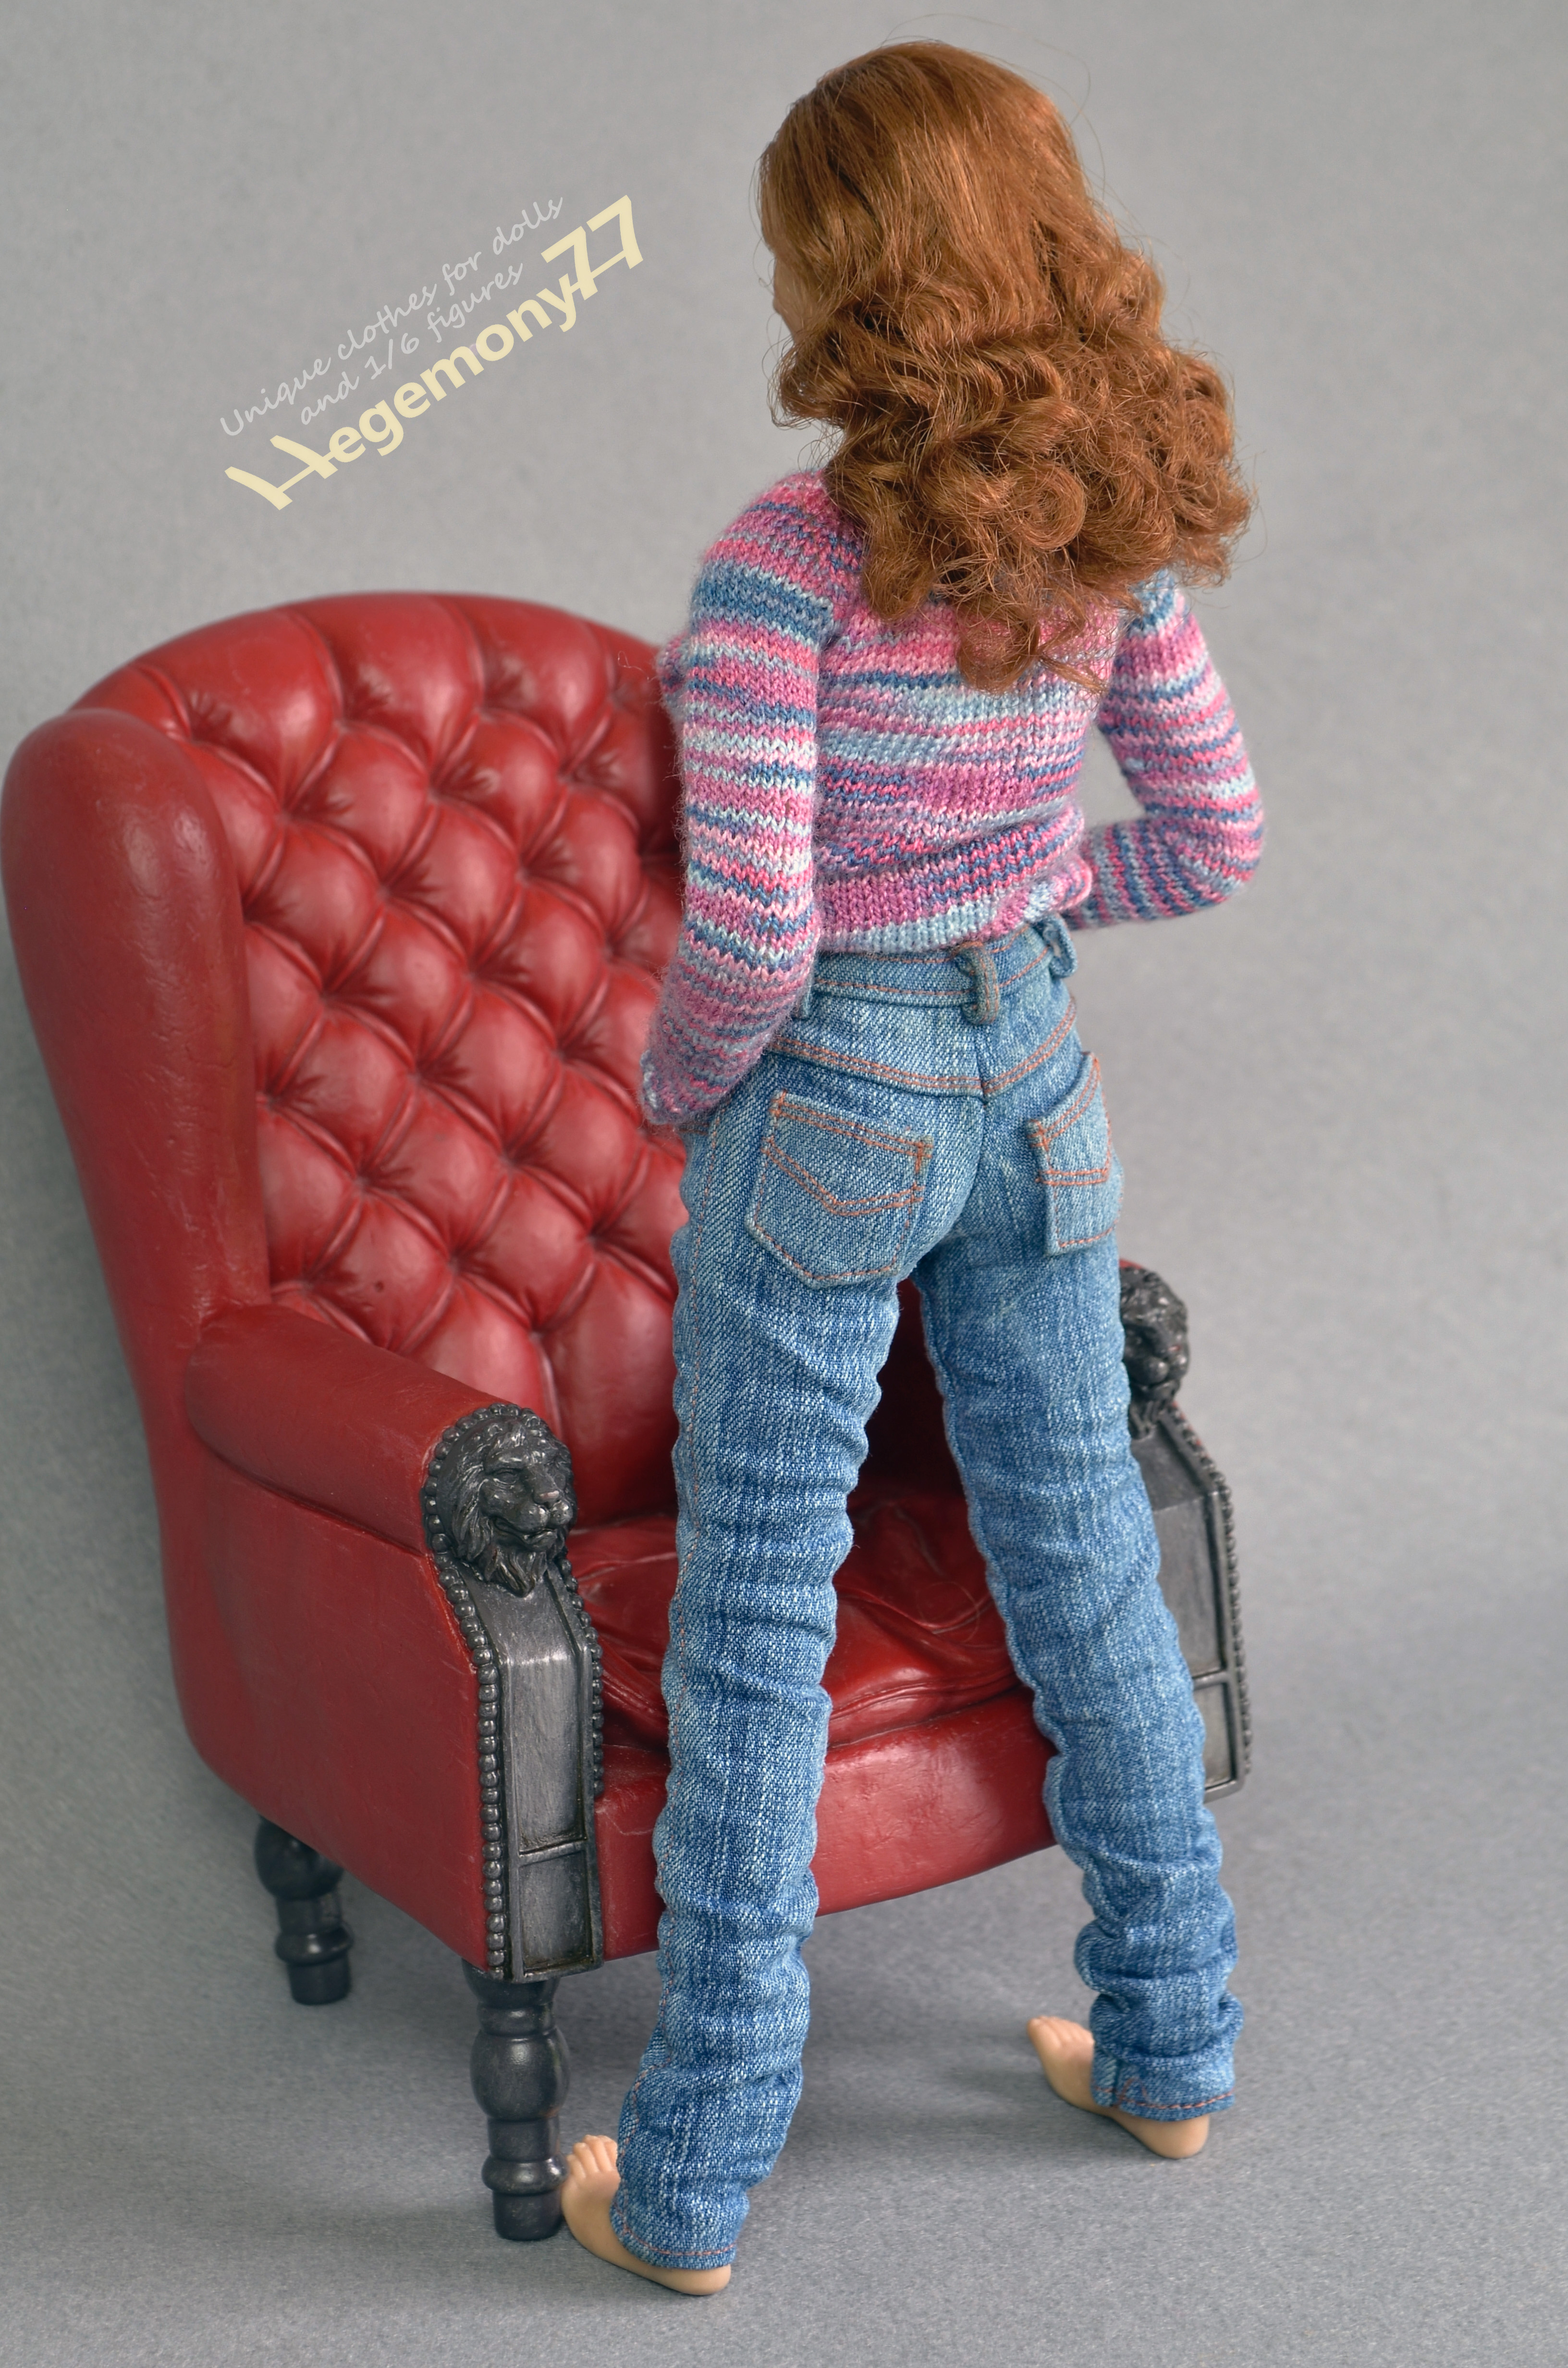 https://hegemony77.files.wordpress.com/2018/06/phicen-tbleague-female-figure-doll-in-1-6-scale-hand-washed-denim-jeans-pants-trousers-b.jpg